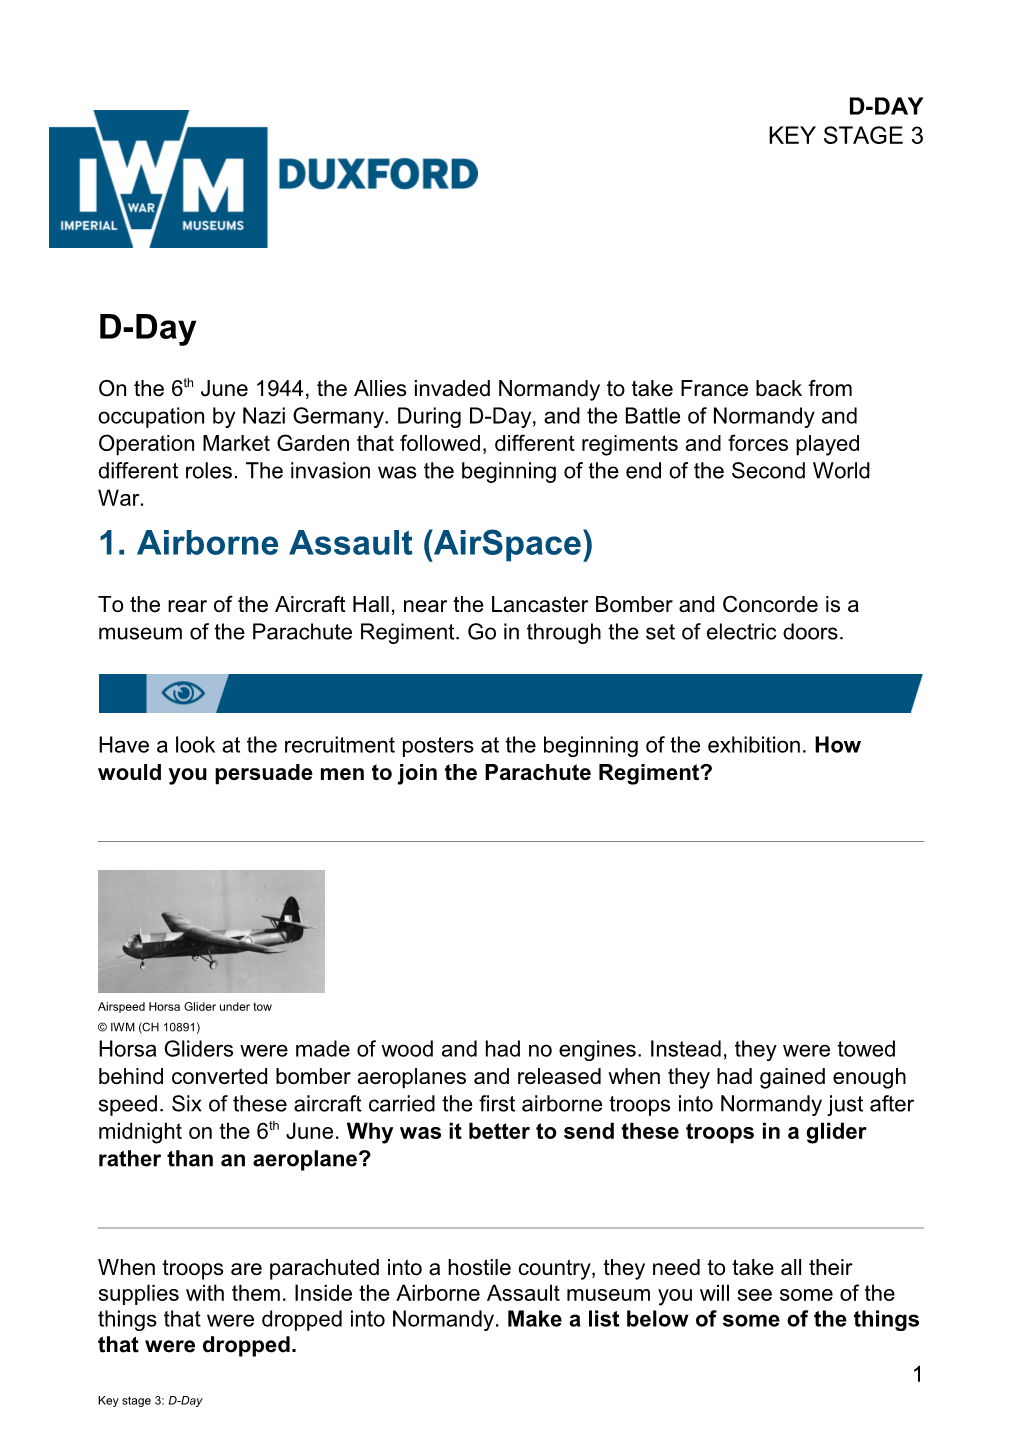 1. Airborne Assault (Airspace)